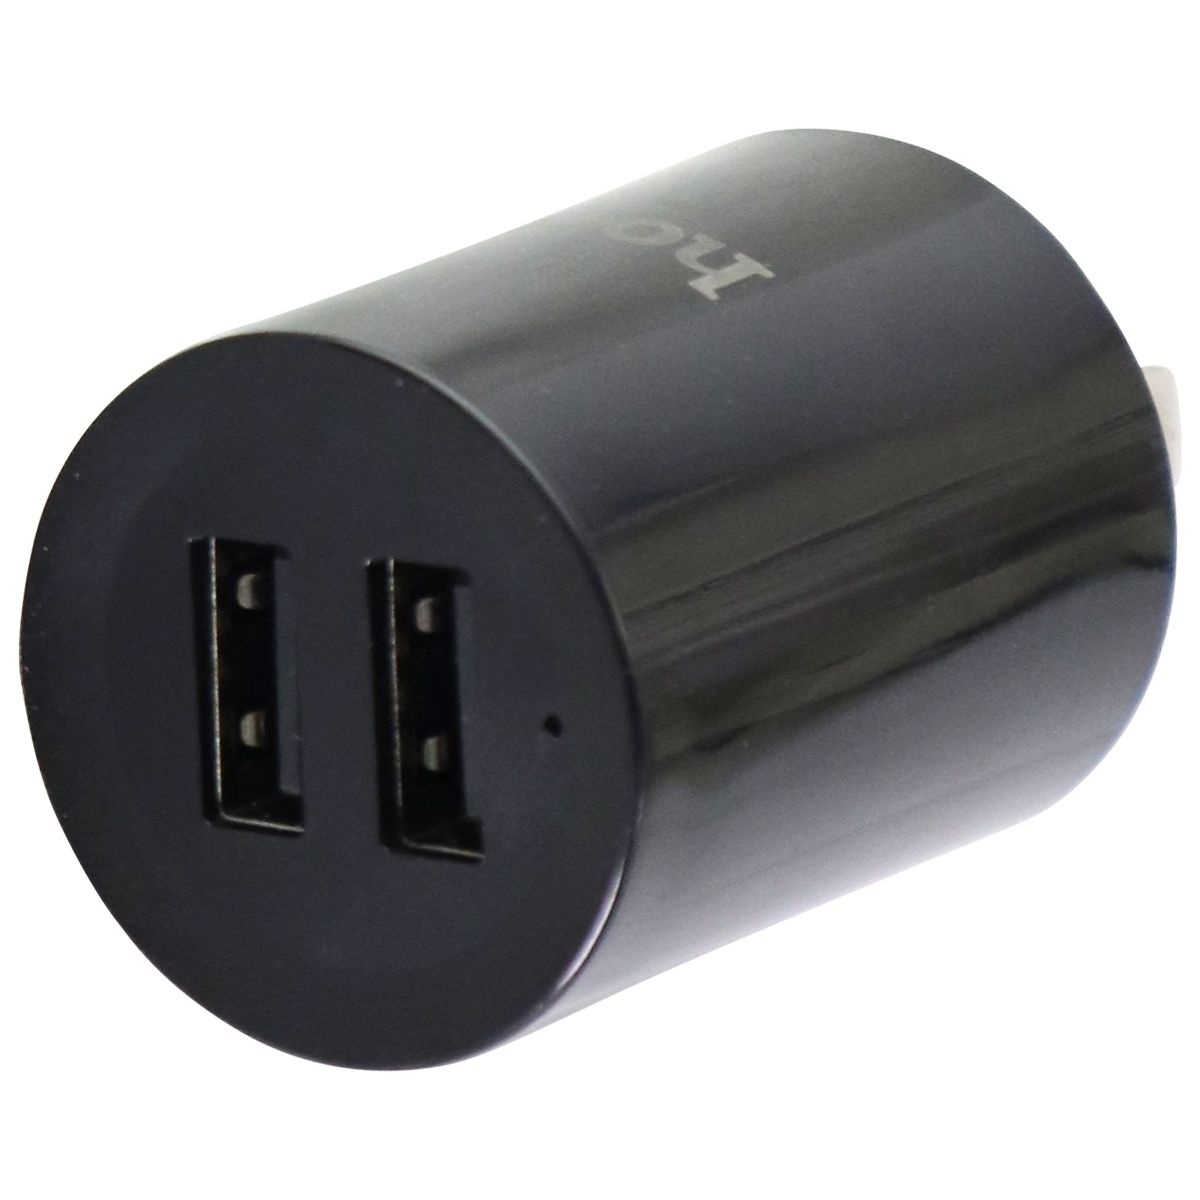 HoCo. (2.4-Amp) C14 Elite Dual USB Wall Charger - Black